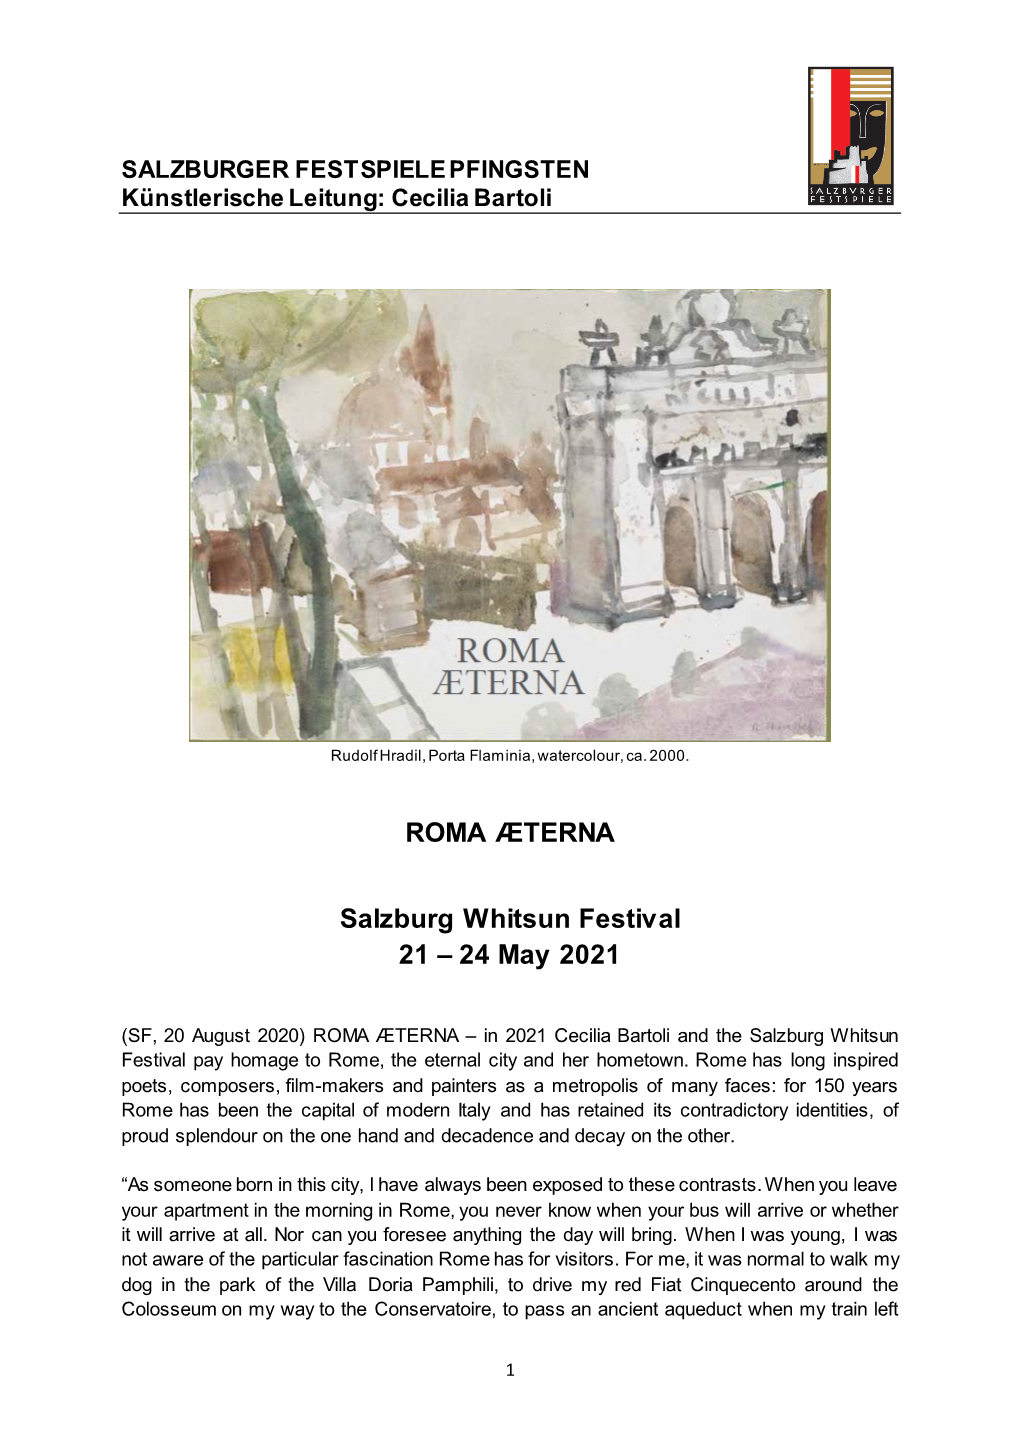 ROMA ÆTERNA Salzburg Whitsun Festival 21 – 24 May 2021